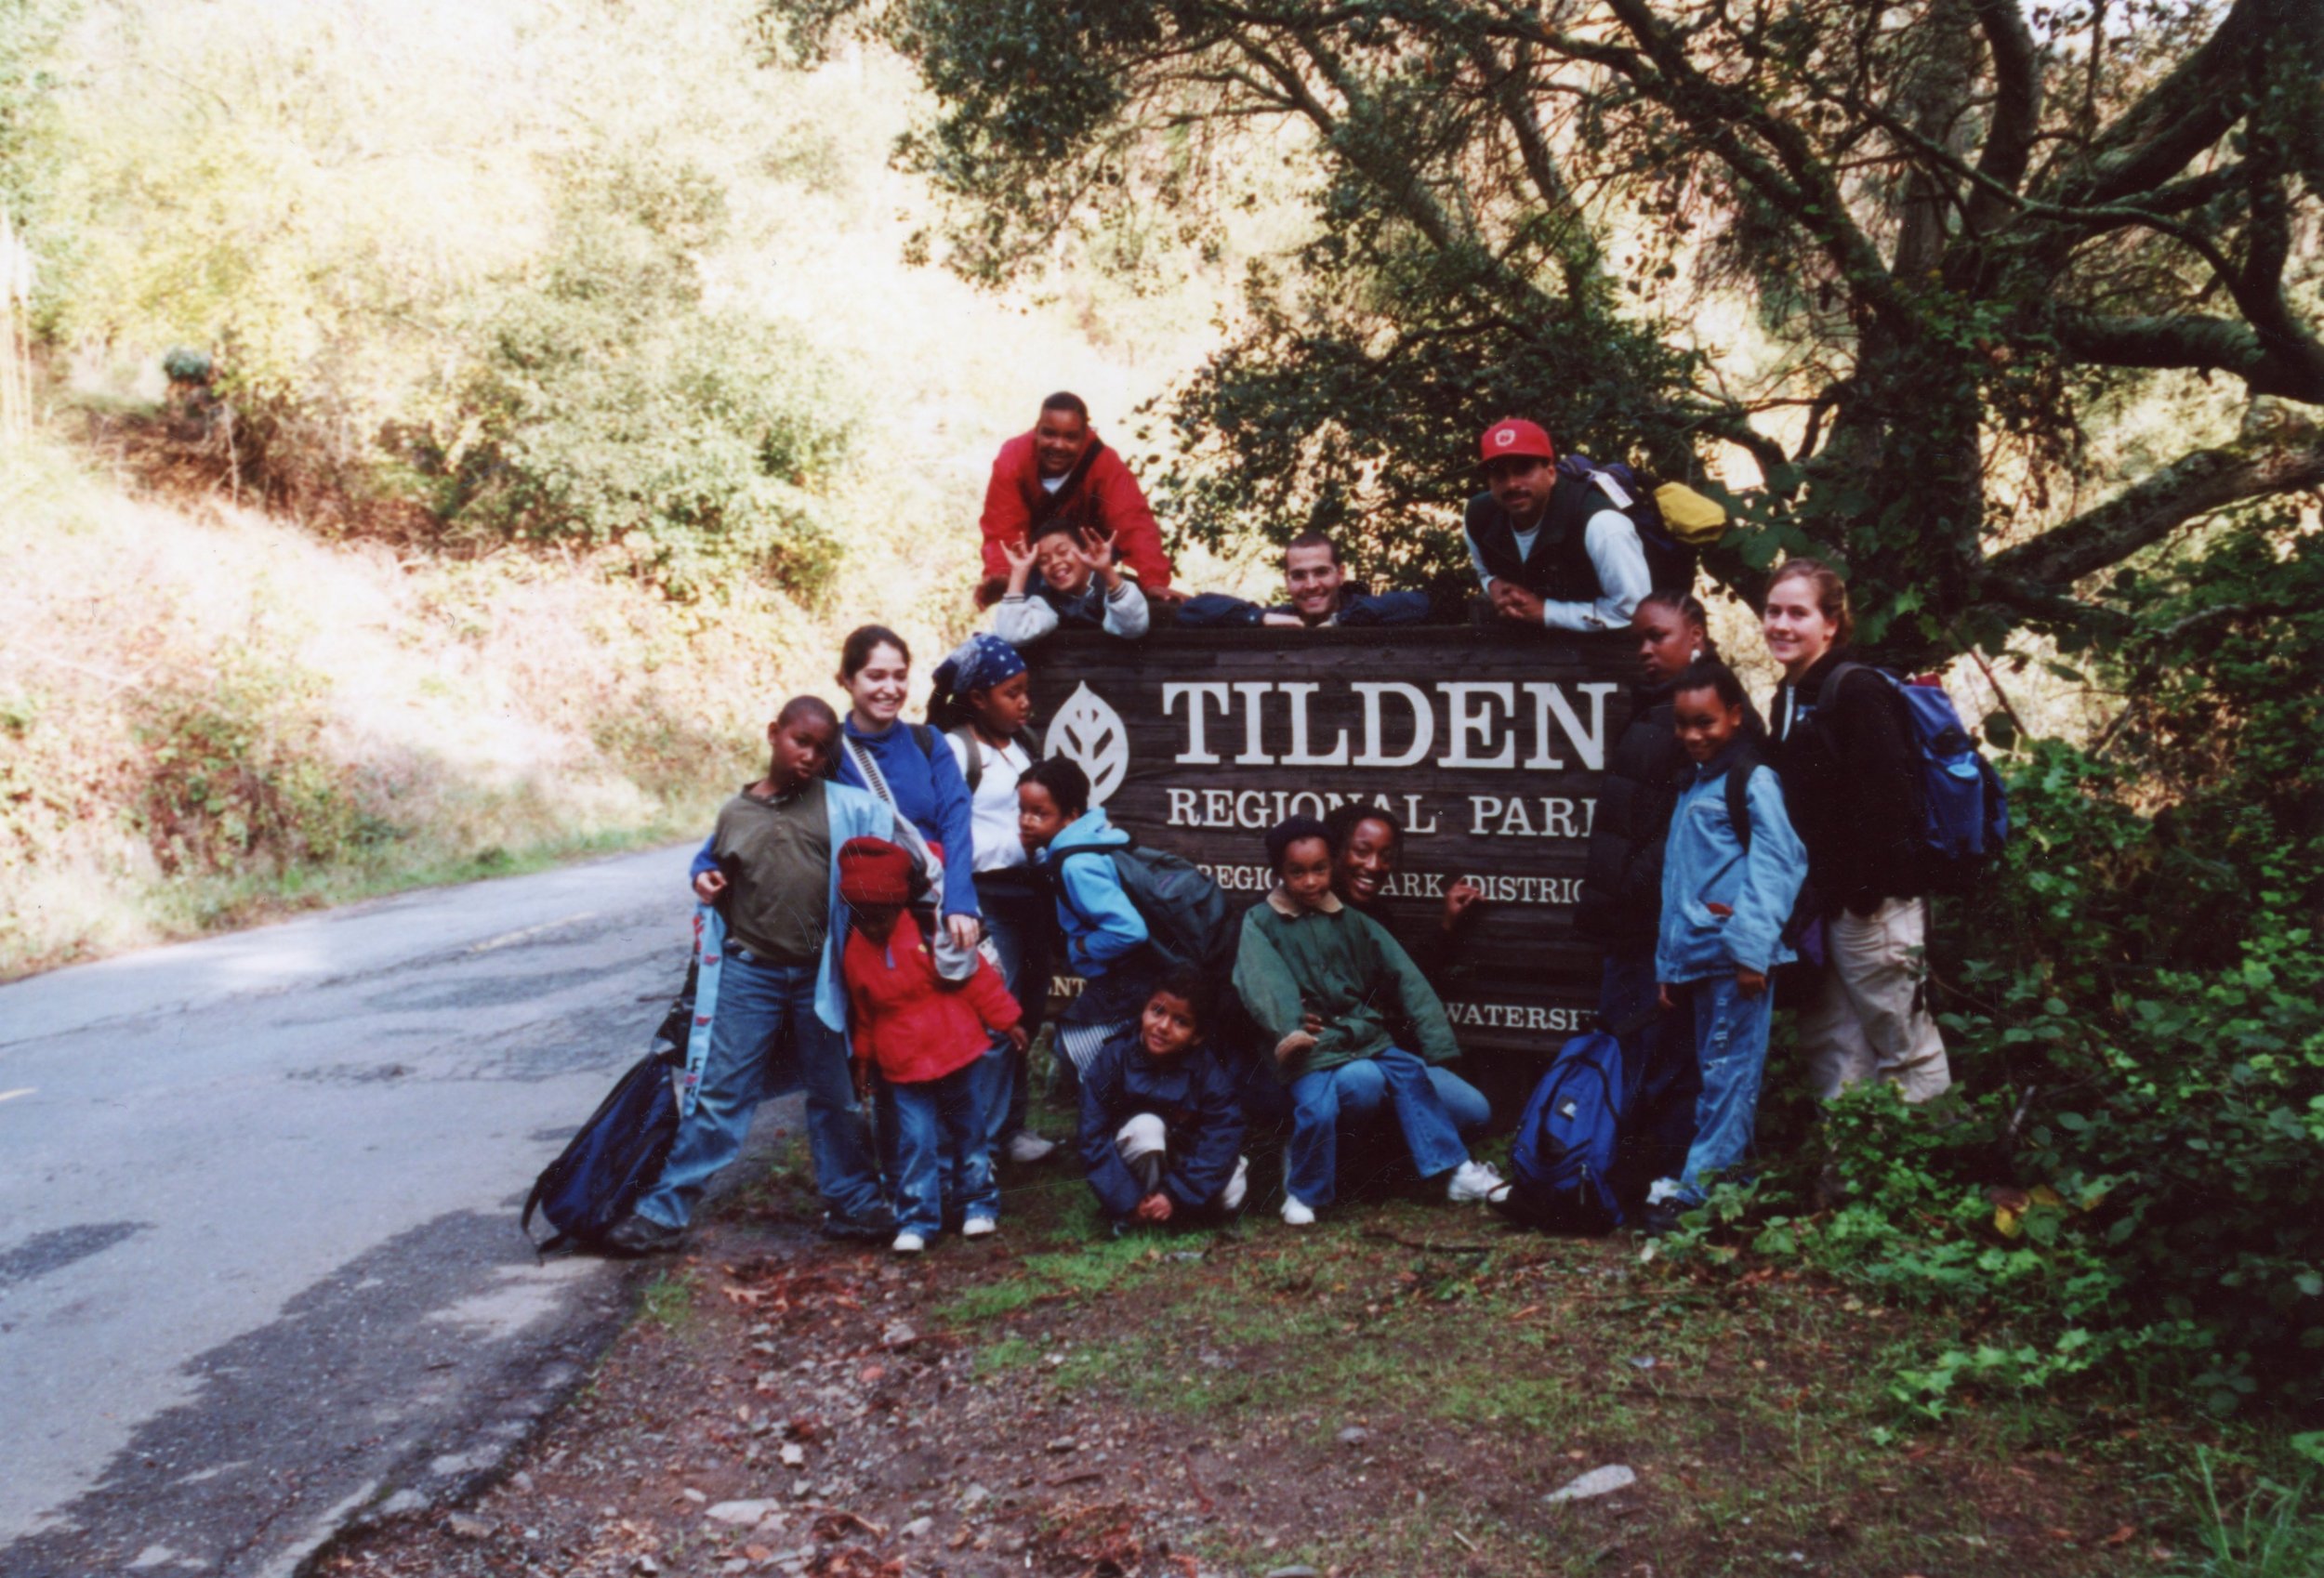   ArtEsteem students on an environmental field trip at Tilden Regional Park.  